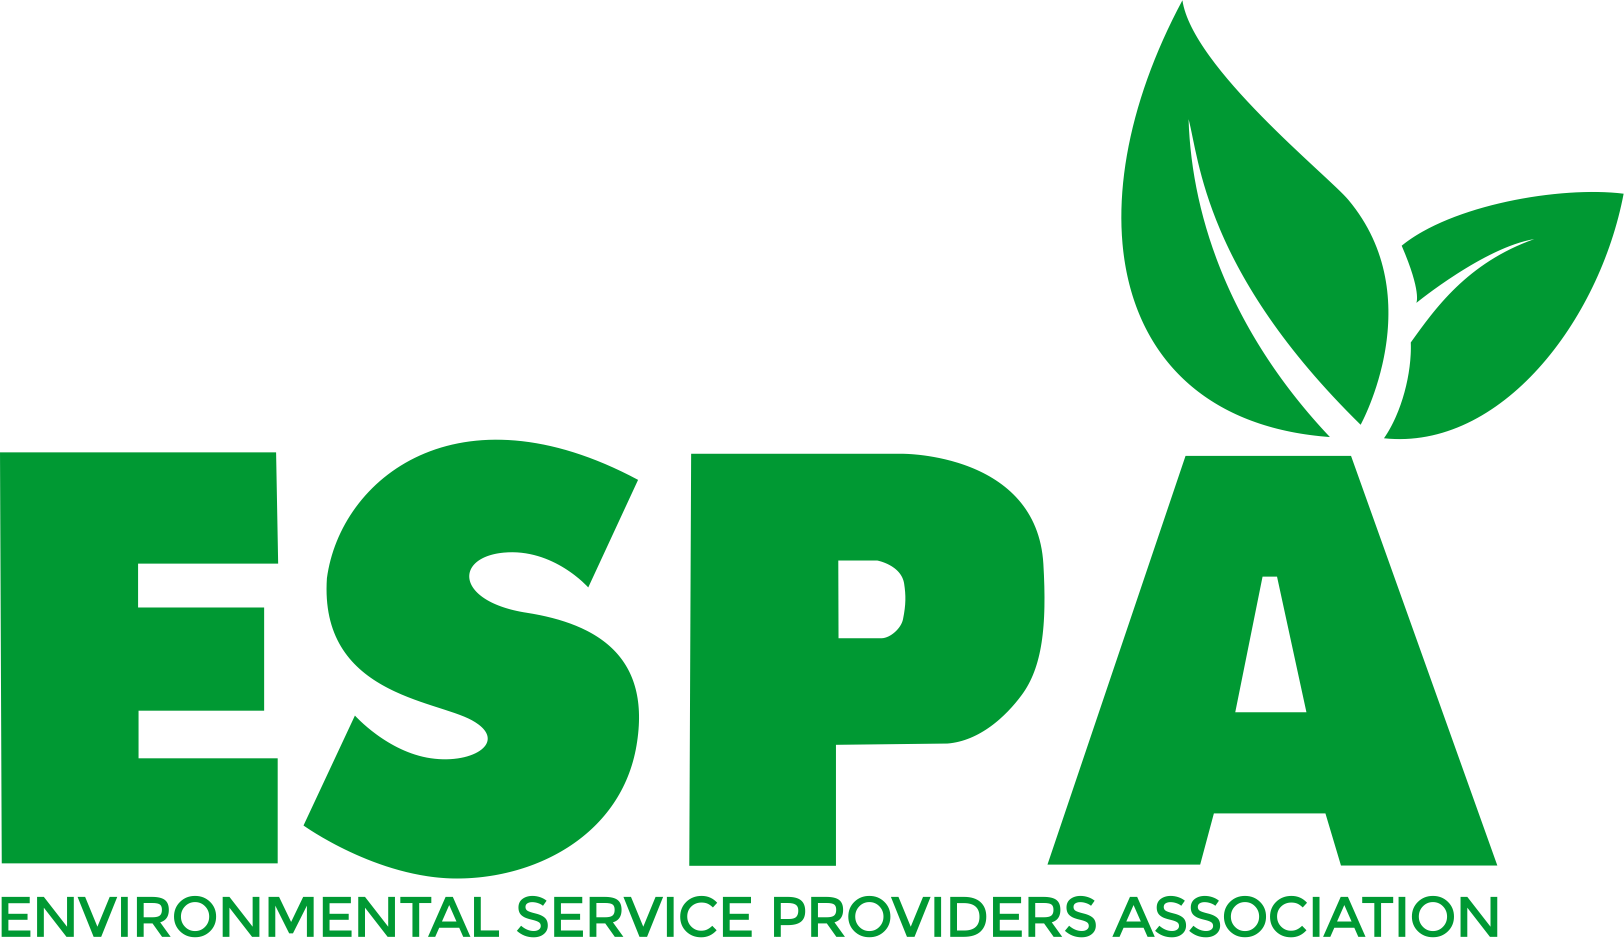 Environmental Service Providers Association